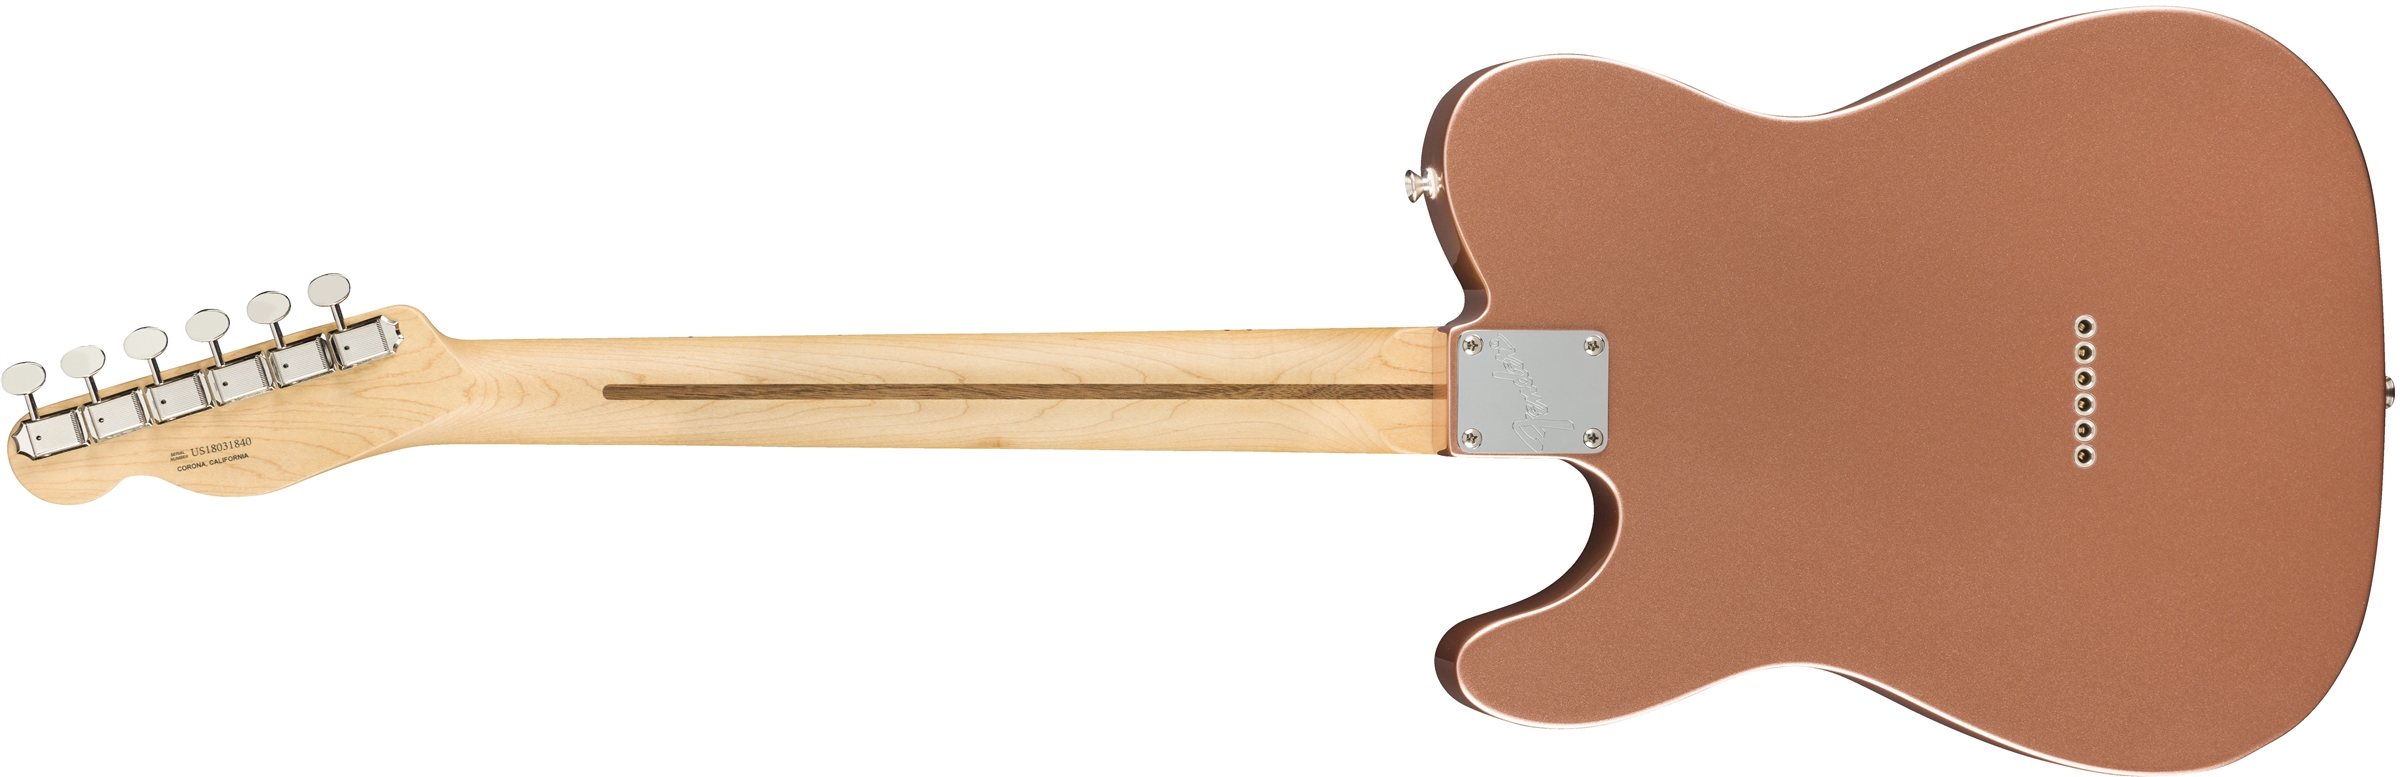 Fender Tele American Performer Usa Mn - Penny - Tel shape electric guitar - Variation 1